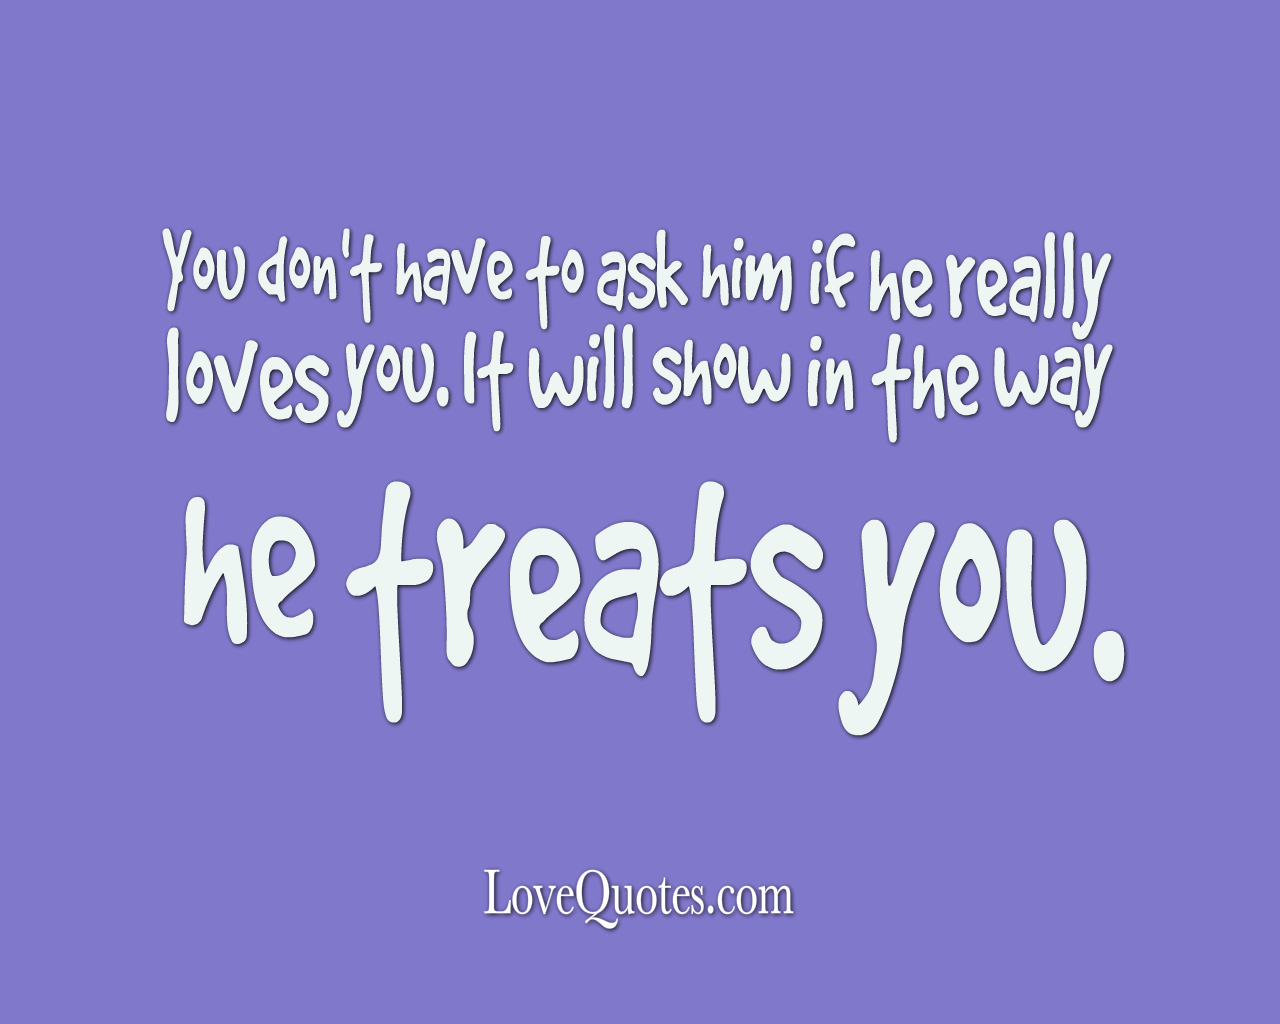 The Way He Treats You